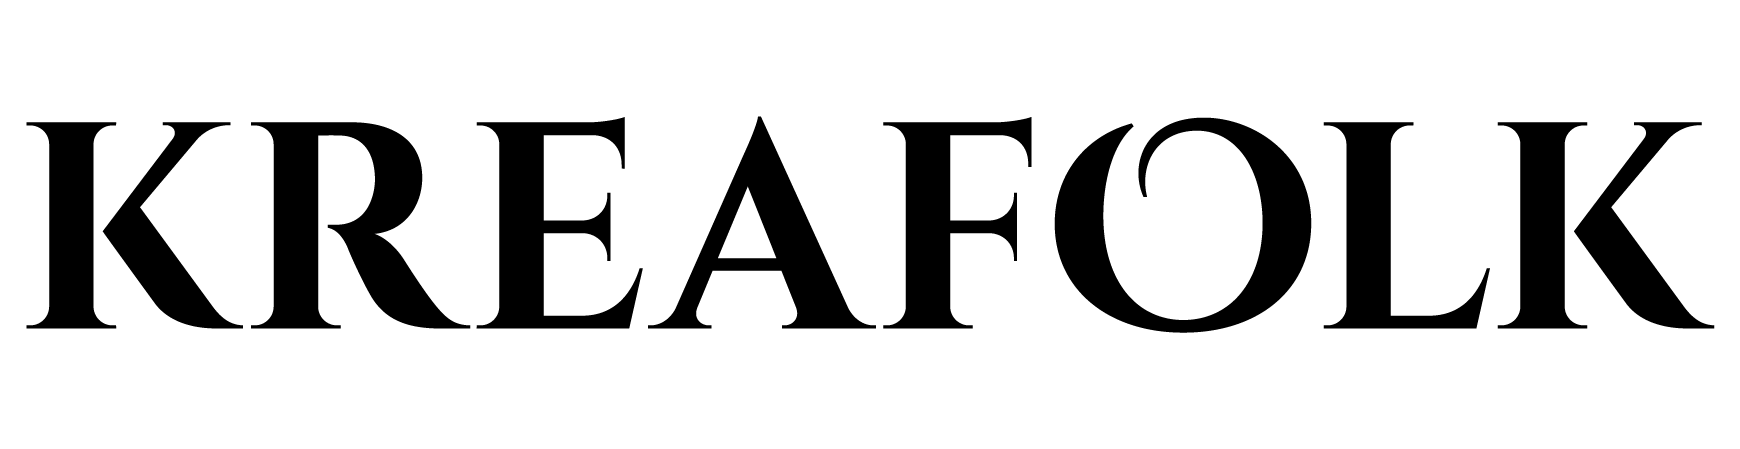 market research logo design